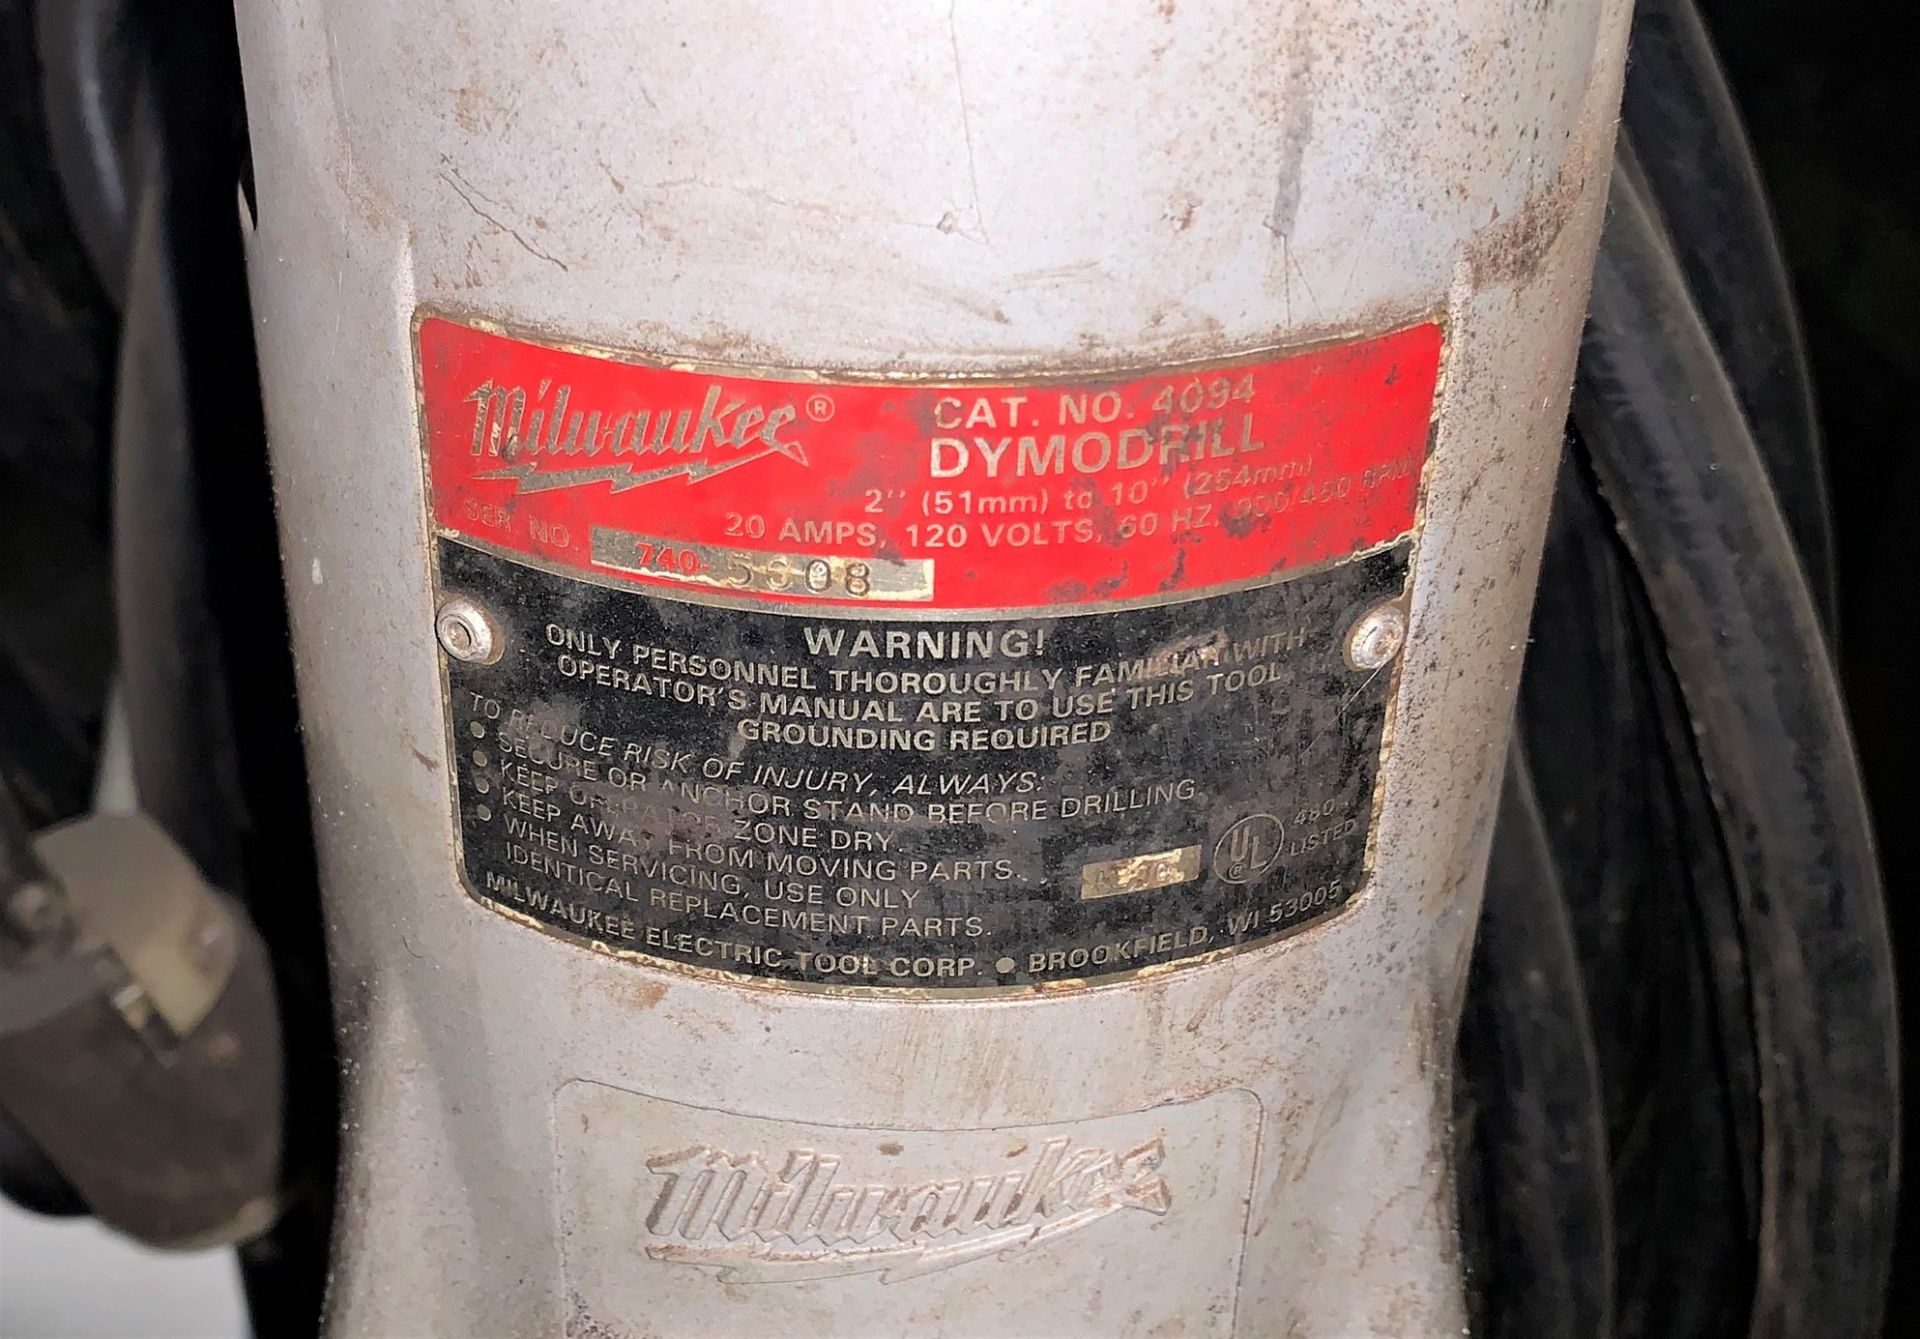 Milwaukee Diamond Head Coring Dymo Drill - Image 4 of 5